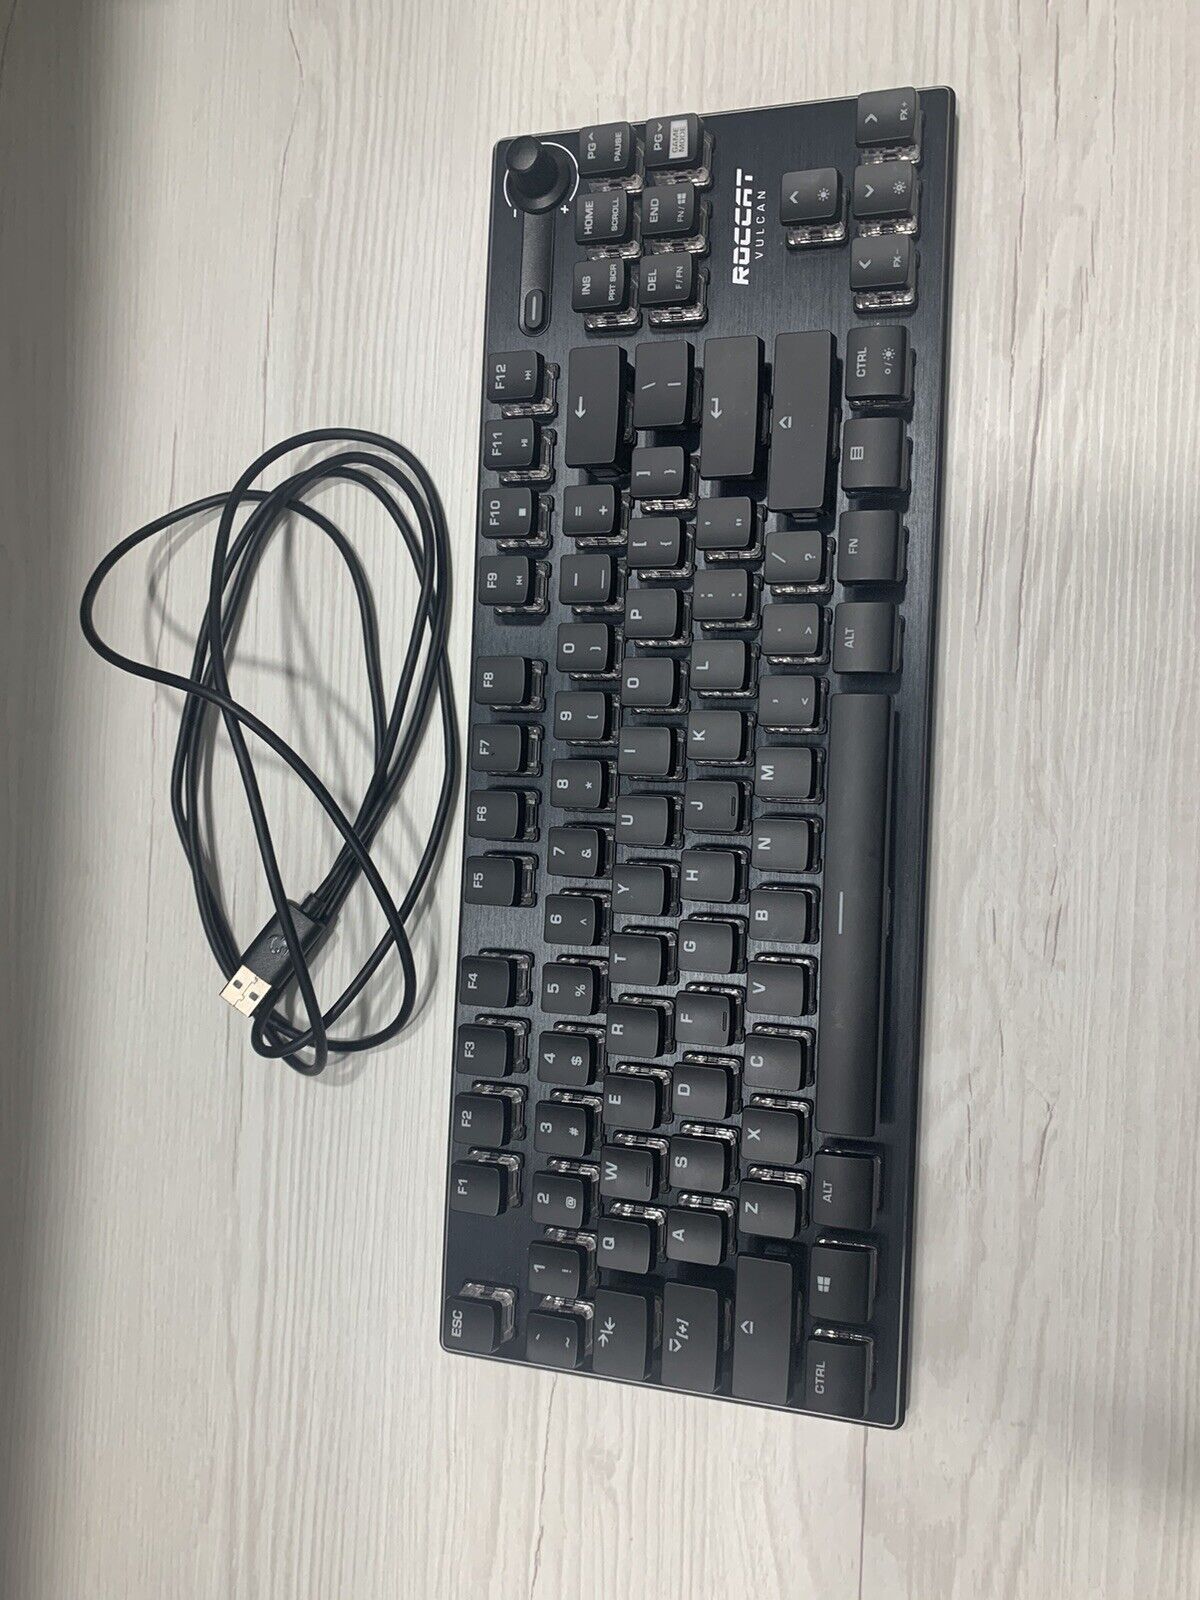 ROCCAT Vulcan TKL Linear PC Gaming Keyboard - Black